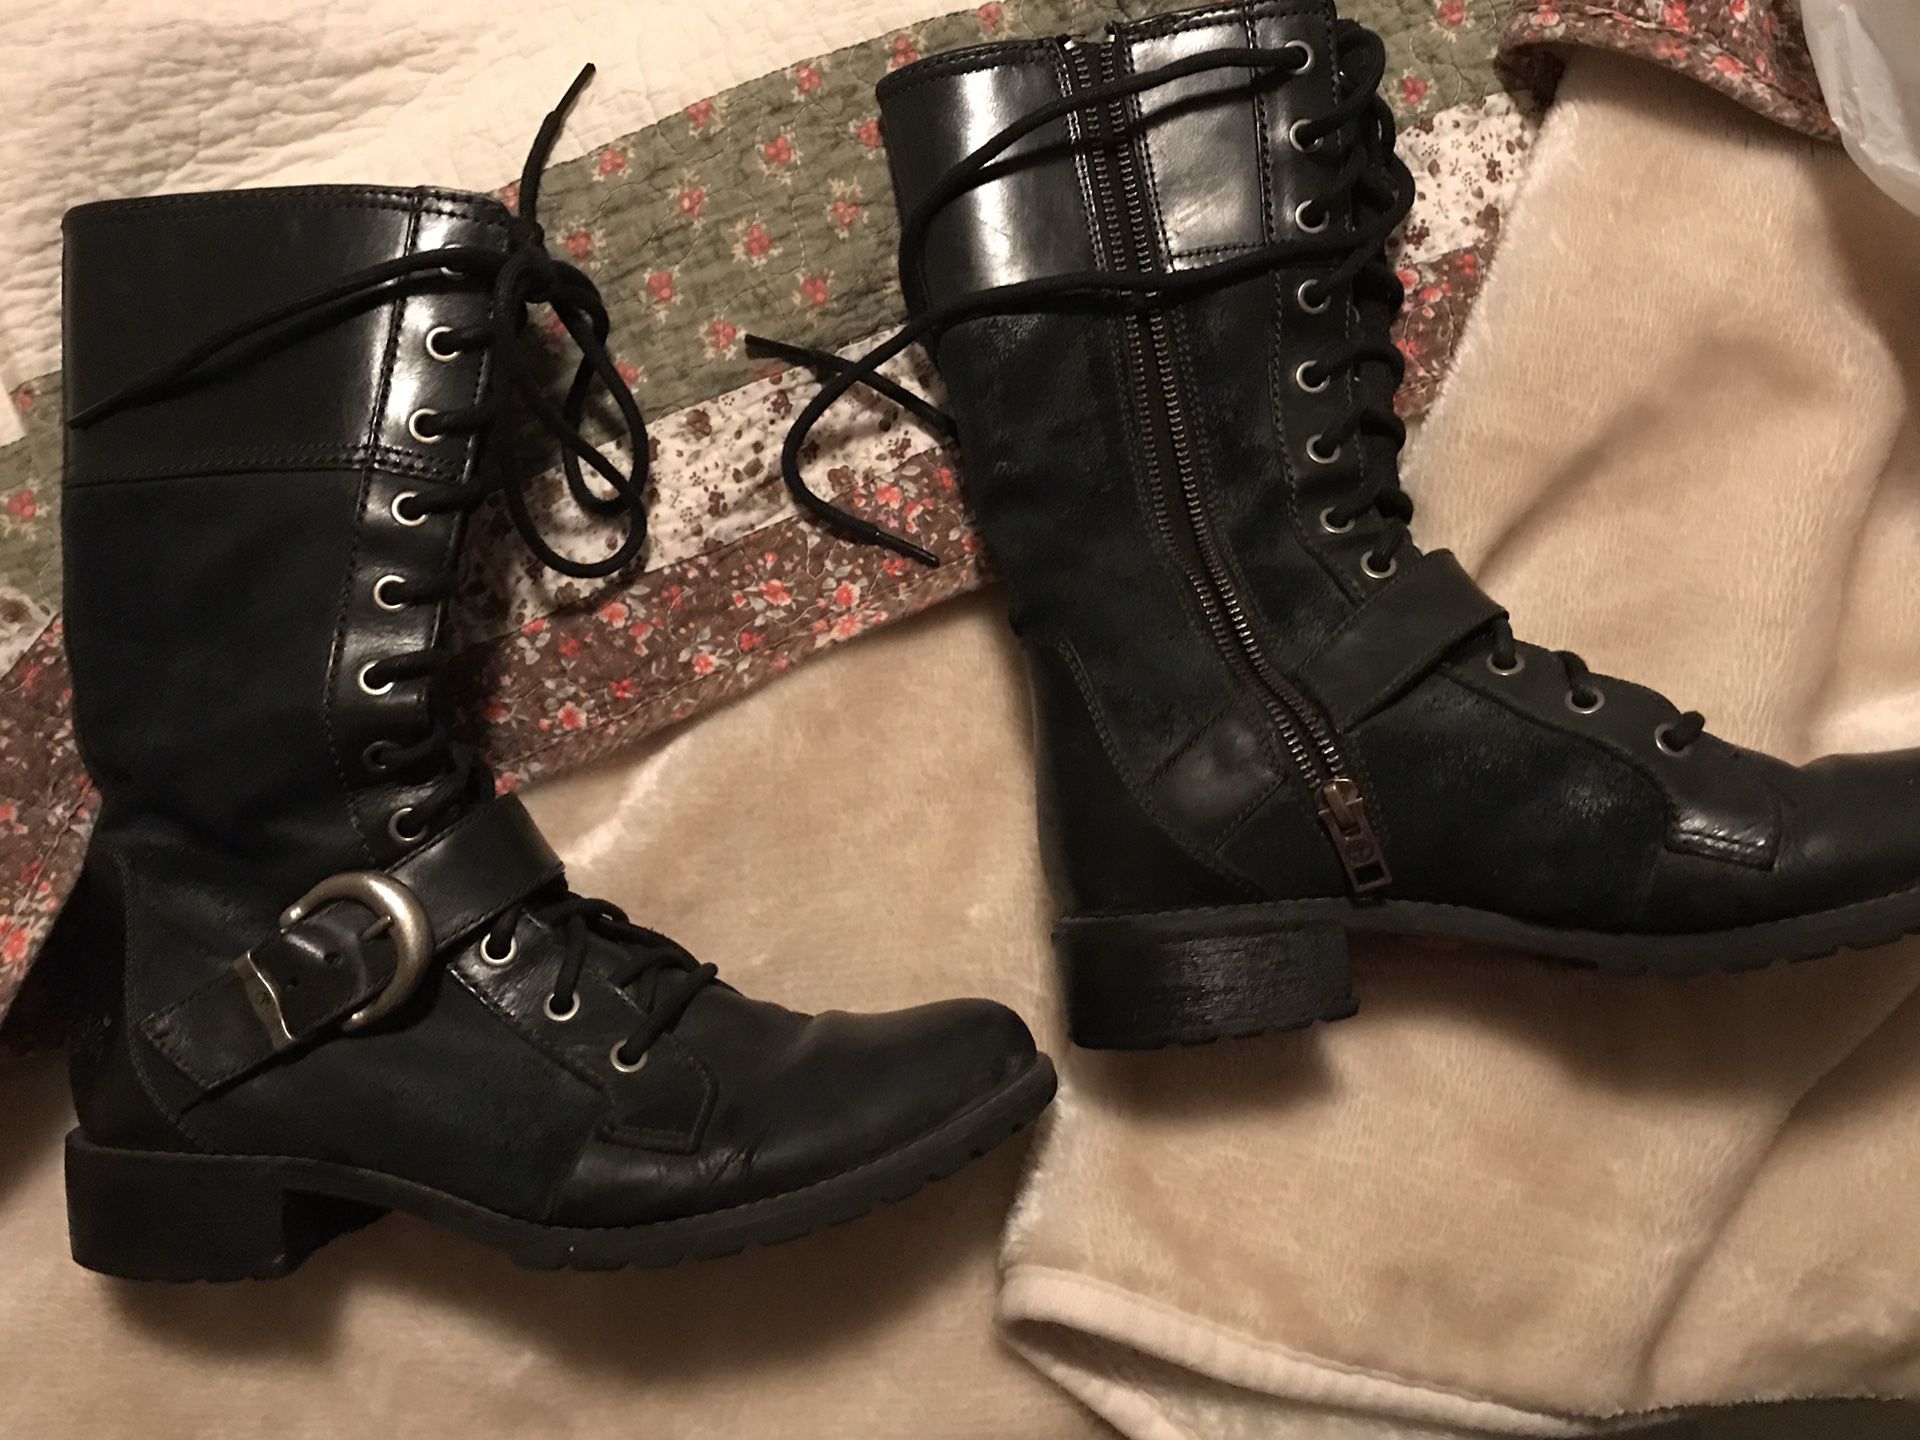 Timberland women’s boots size 8.5